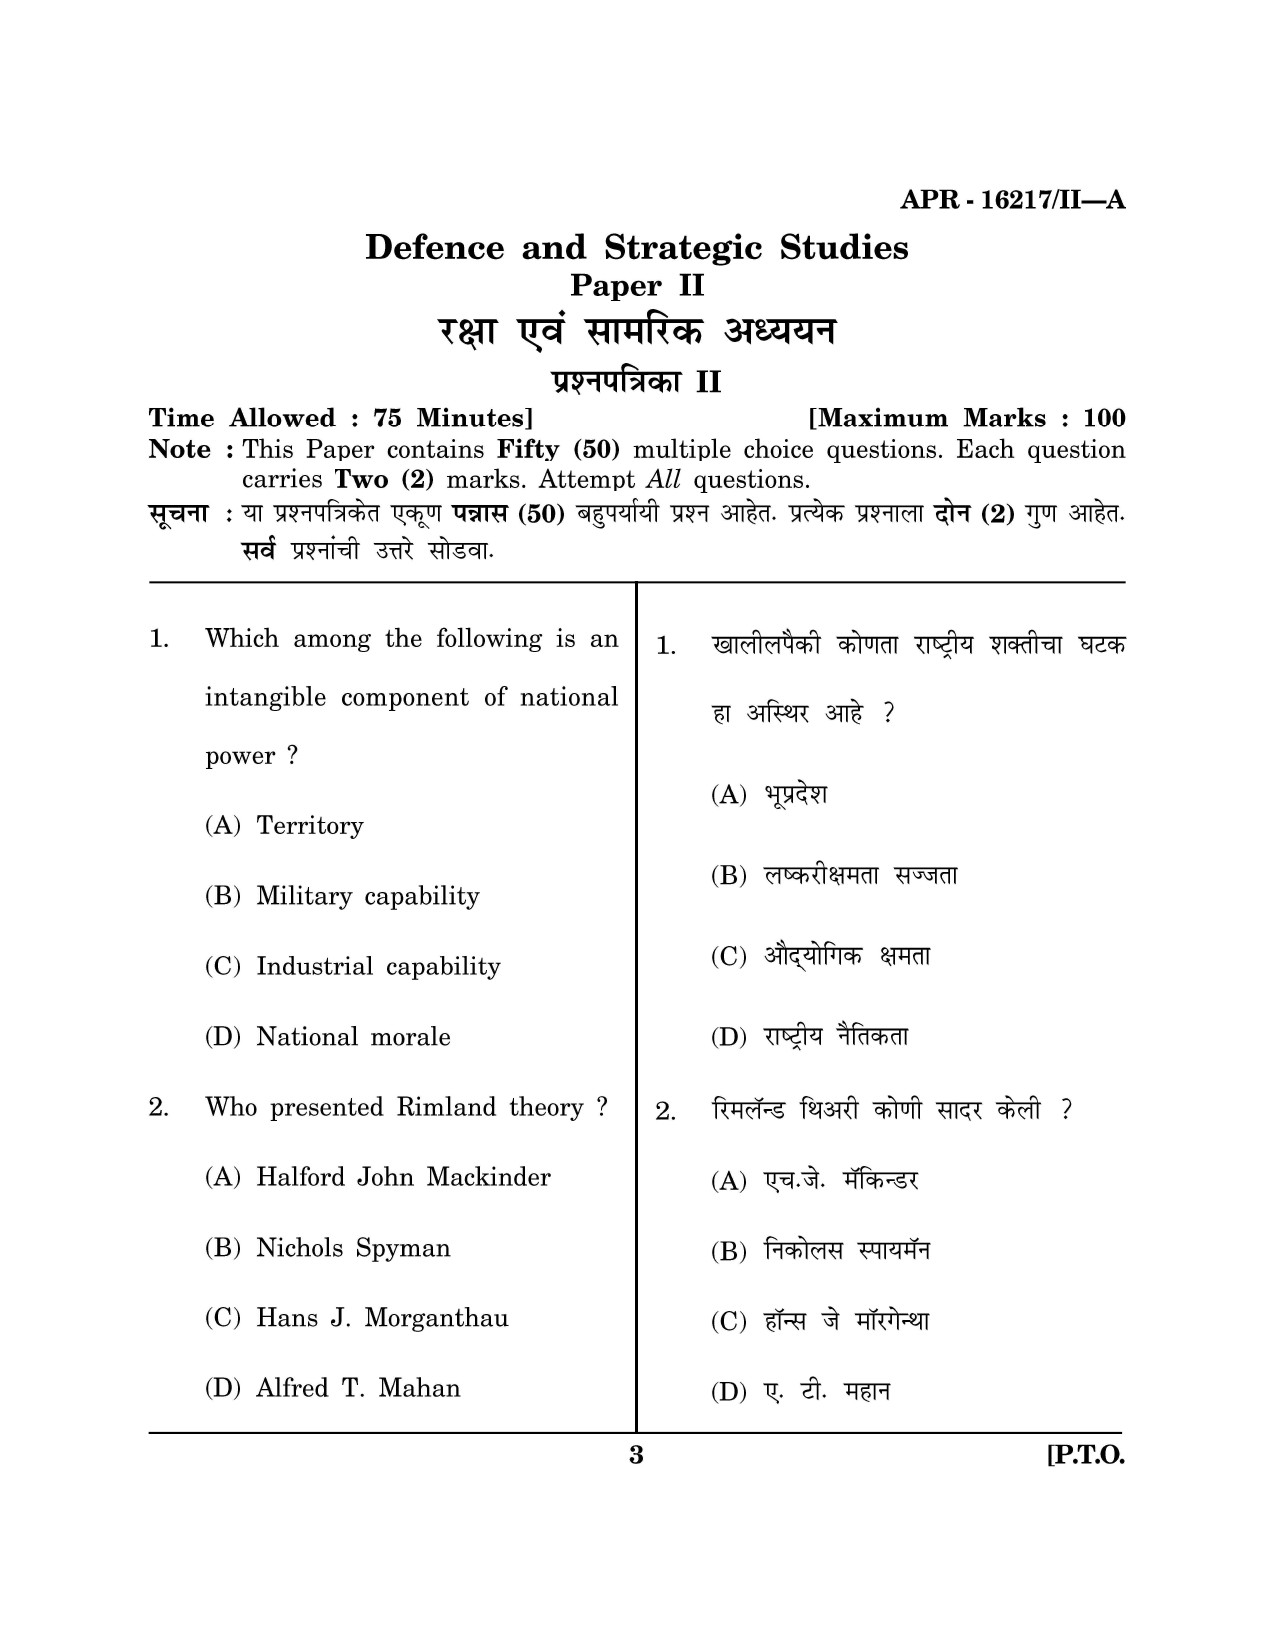 Maharashtra SET Defence and Strategic Studies Question Paper II April 2017 2